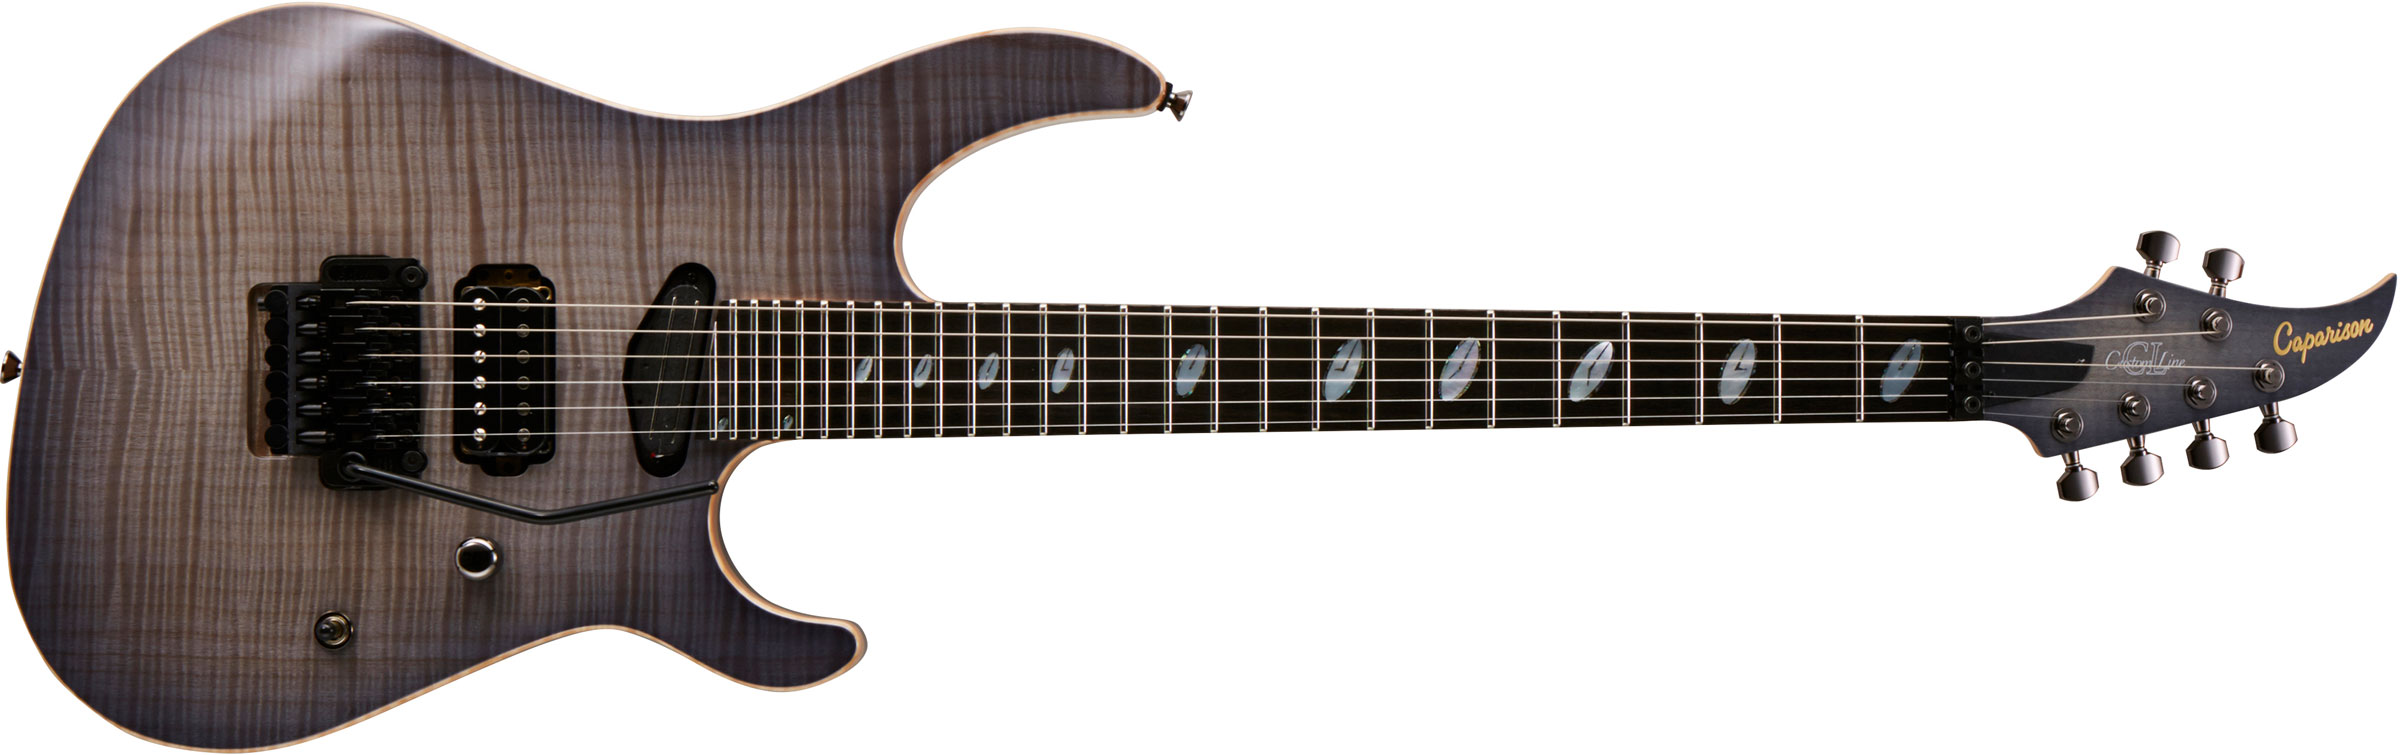 Caparison Guitars Horus-M3B Custom Line 日本語